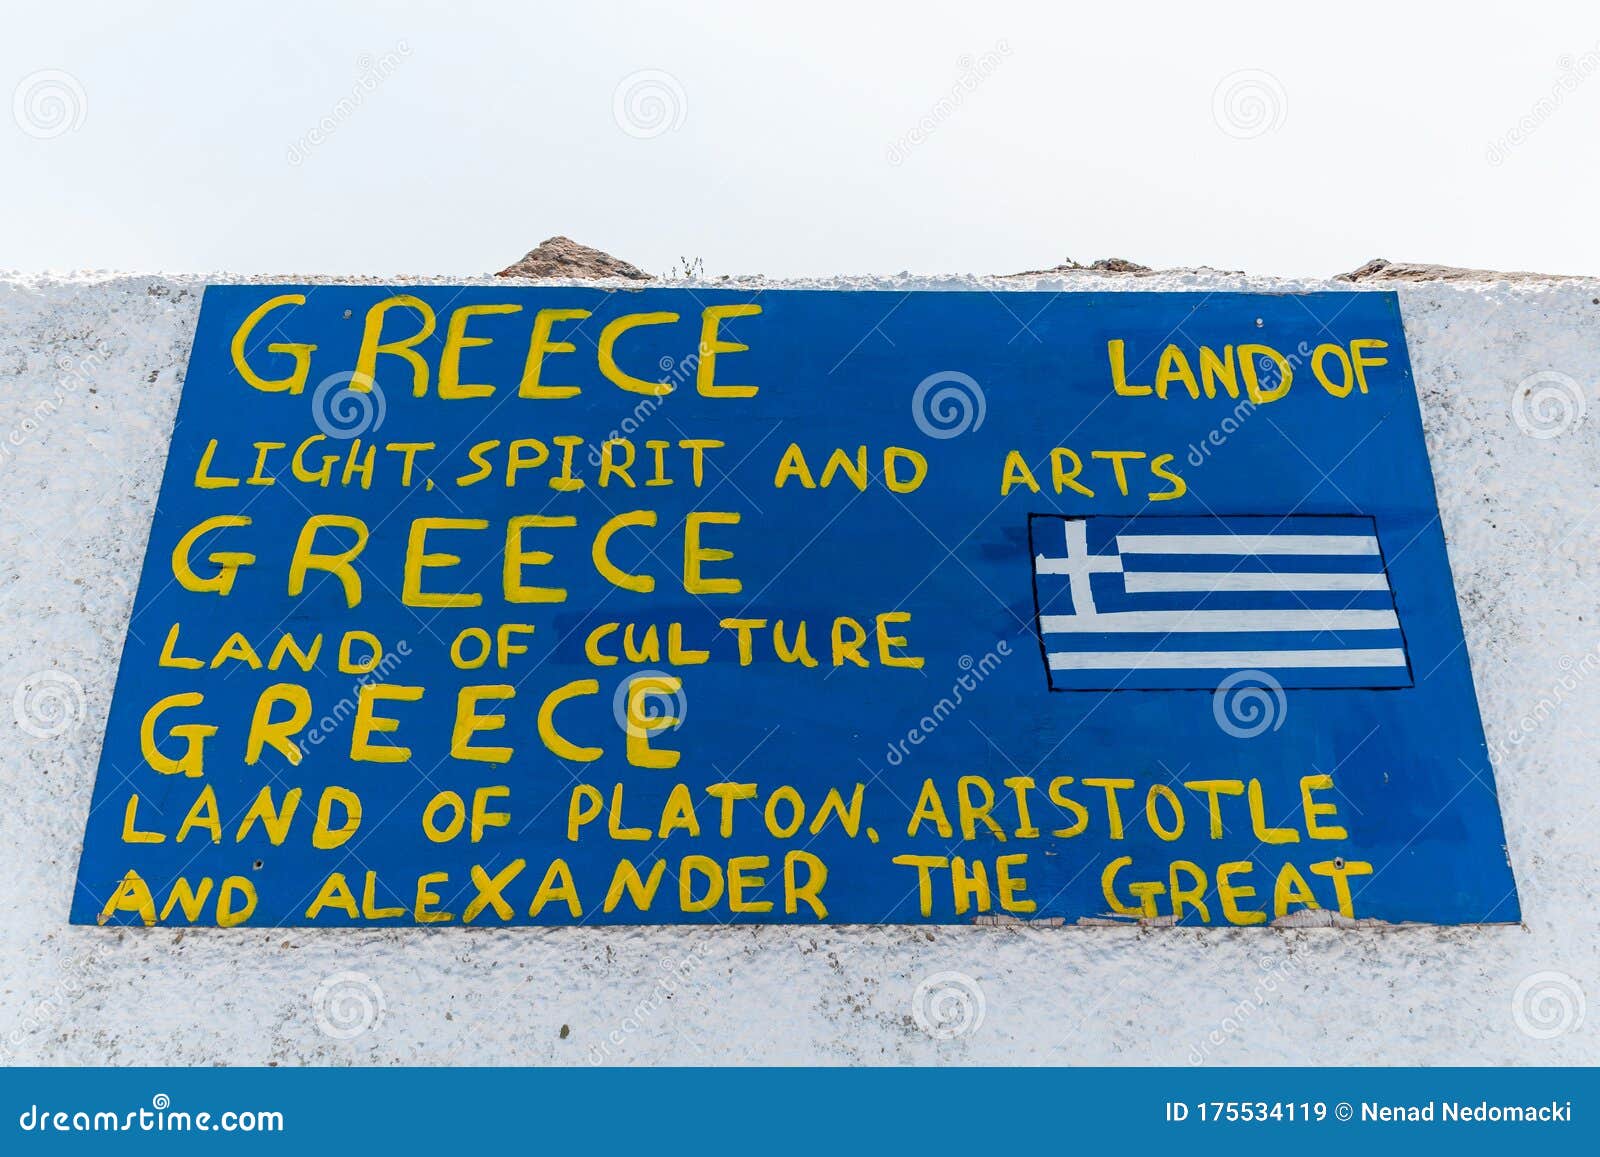 greece land of light, spirit and arts. greece land of culture. greece land of platon, aristotle and alexander the great.